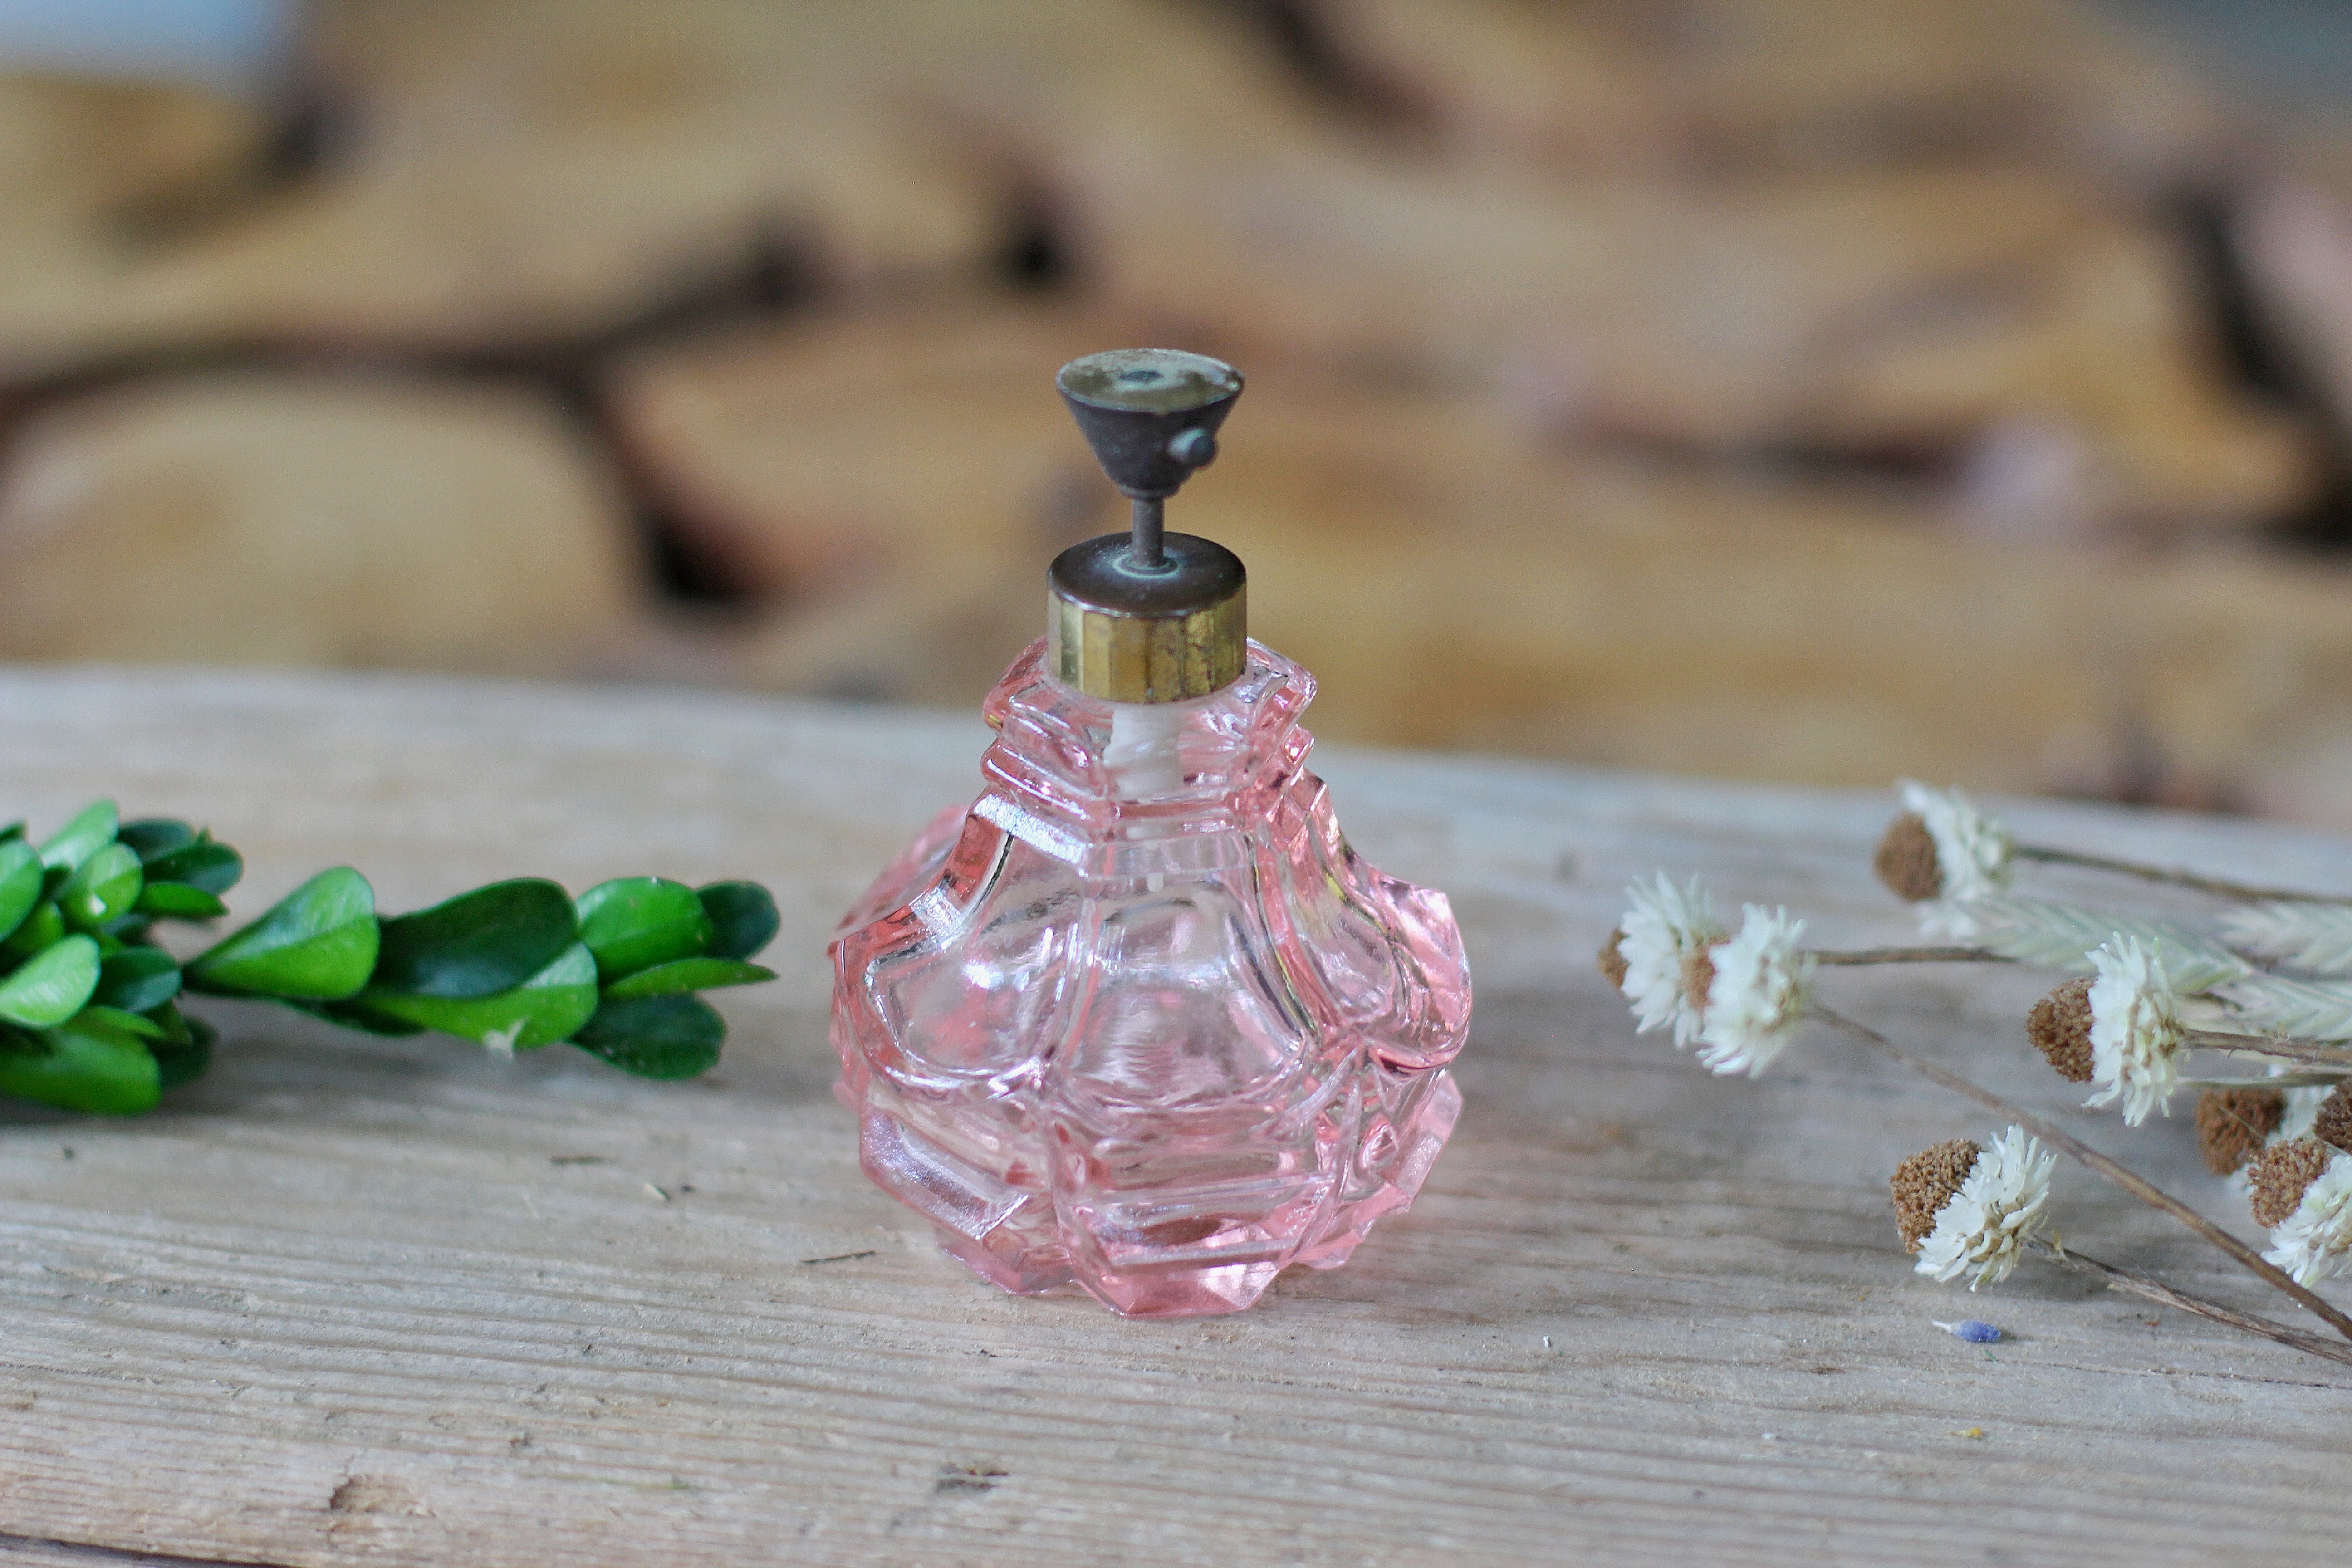 Vintage Pink Perfume Bottle